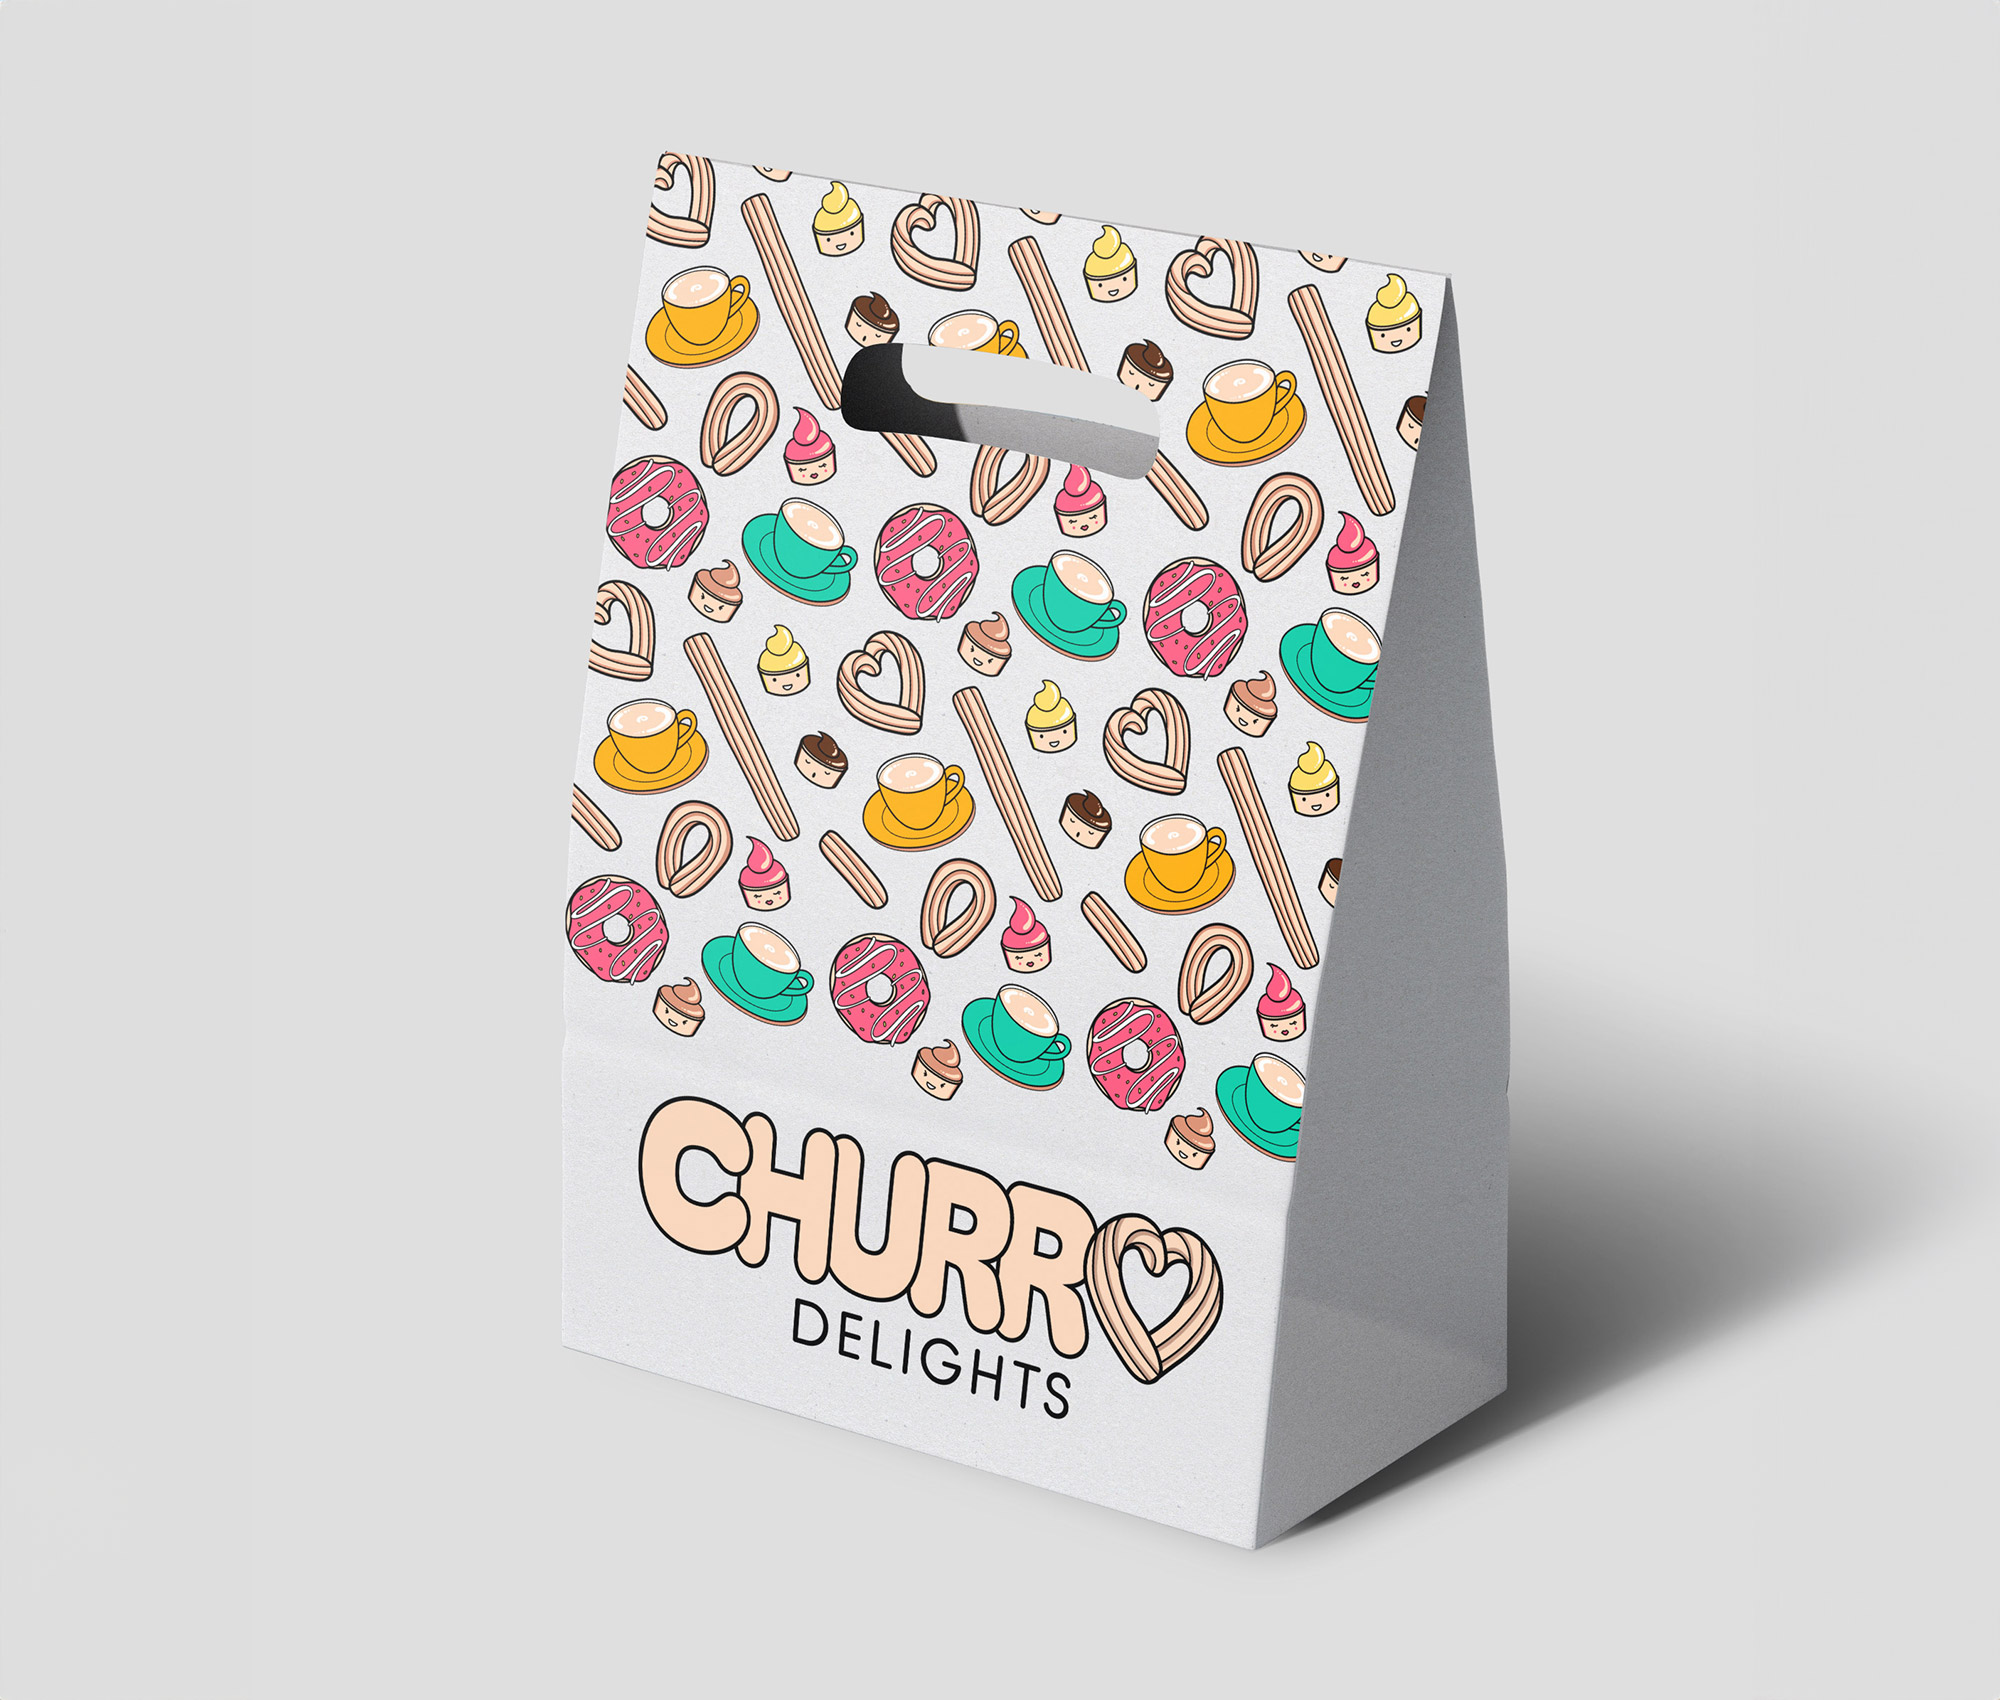 Churro Delights Logo & Packaging